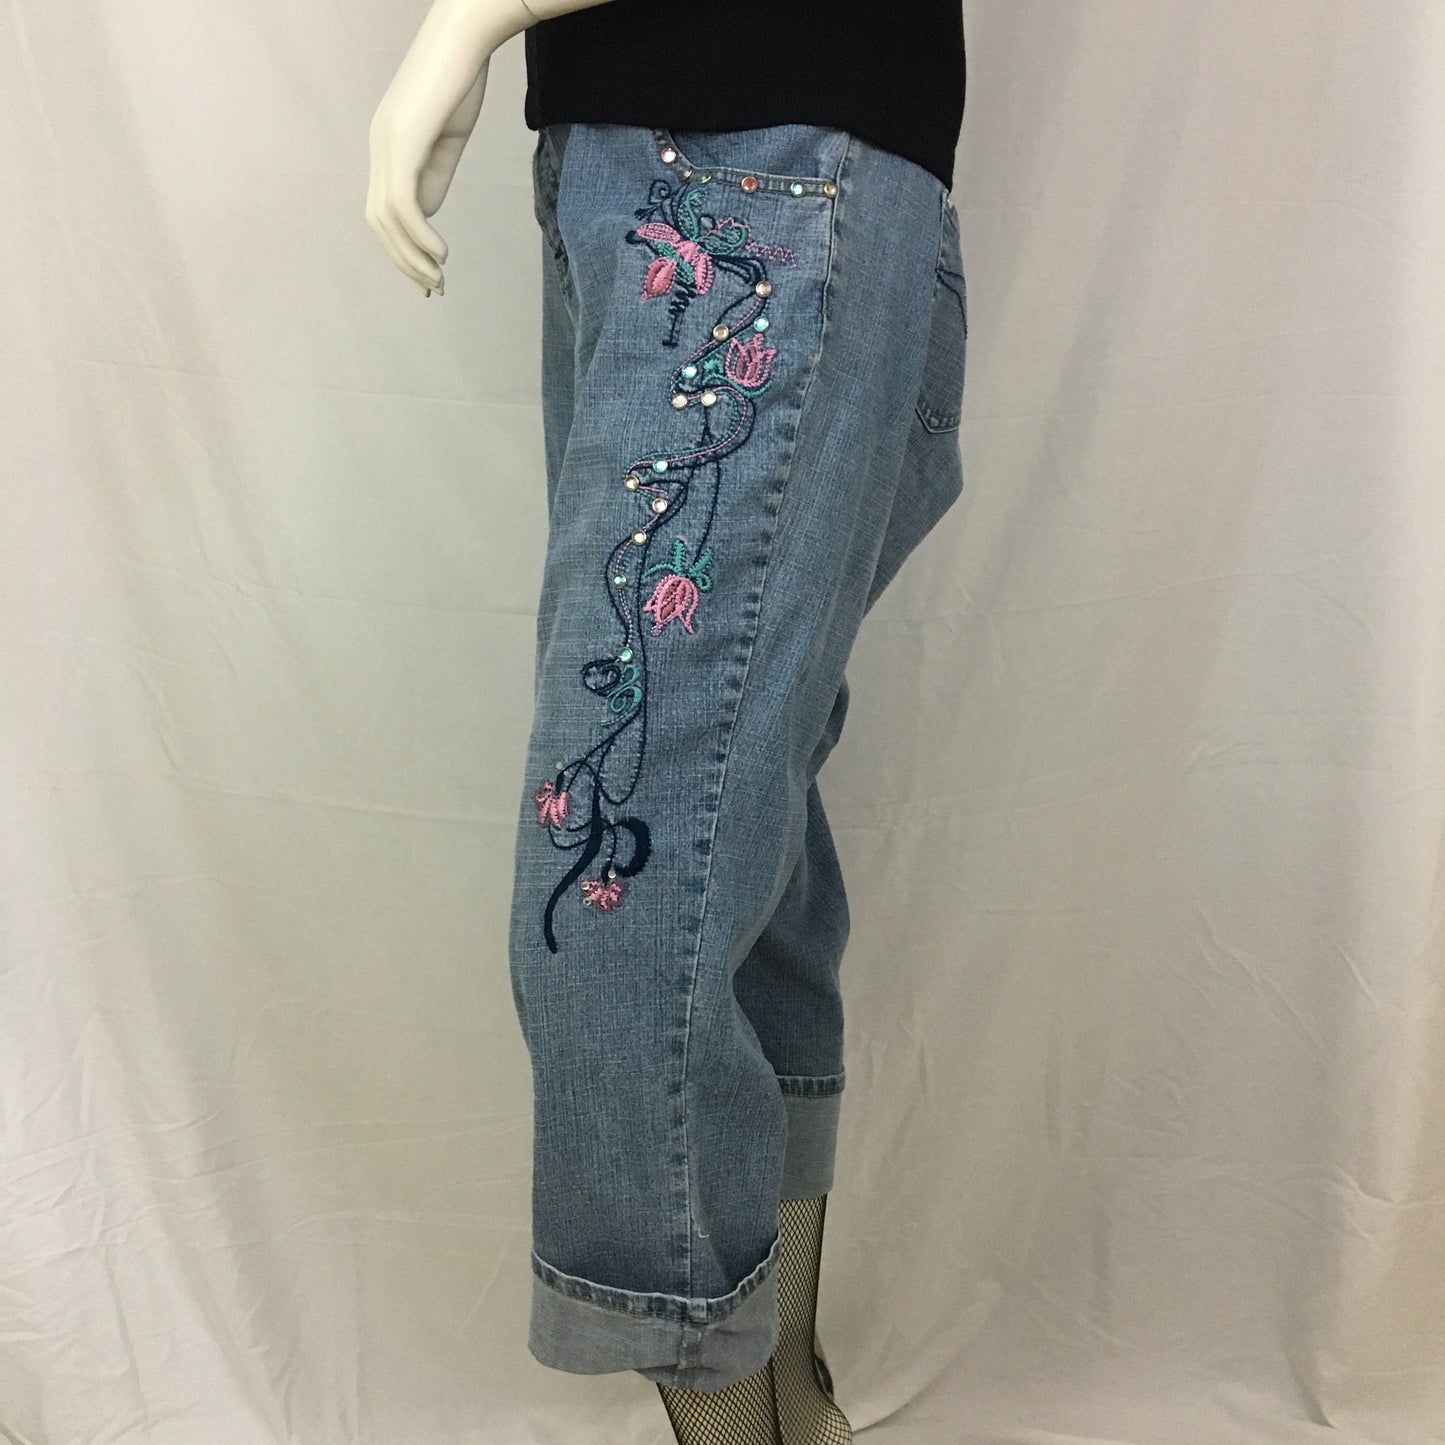 Mwah Pants Denim Cropped Embellished & Embroidered Size 16W SKU 000338-11